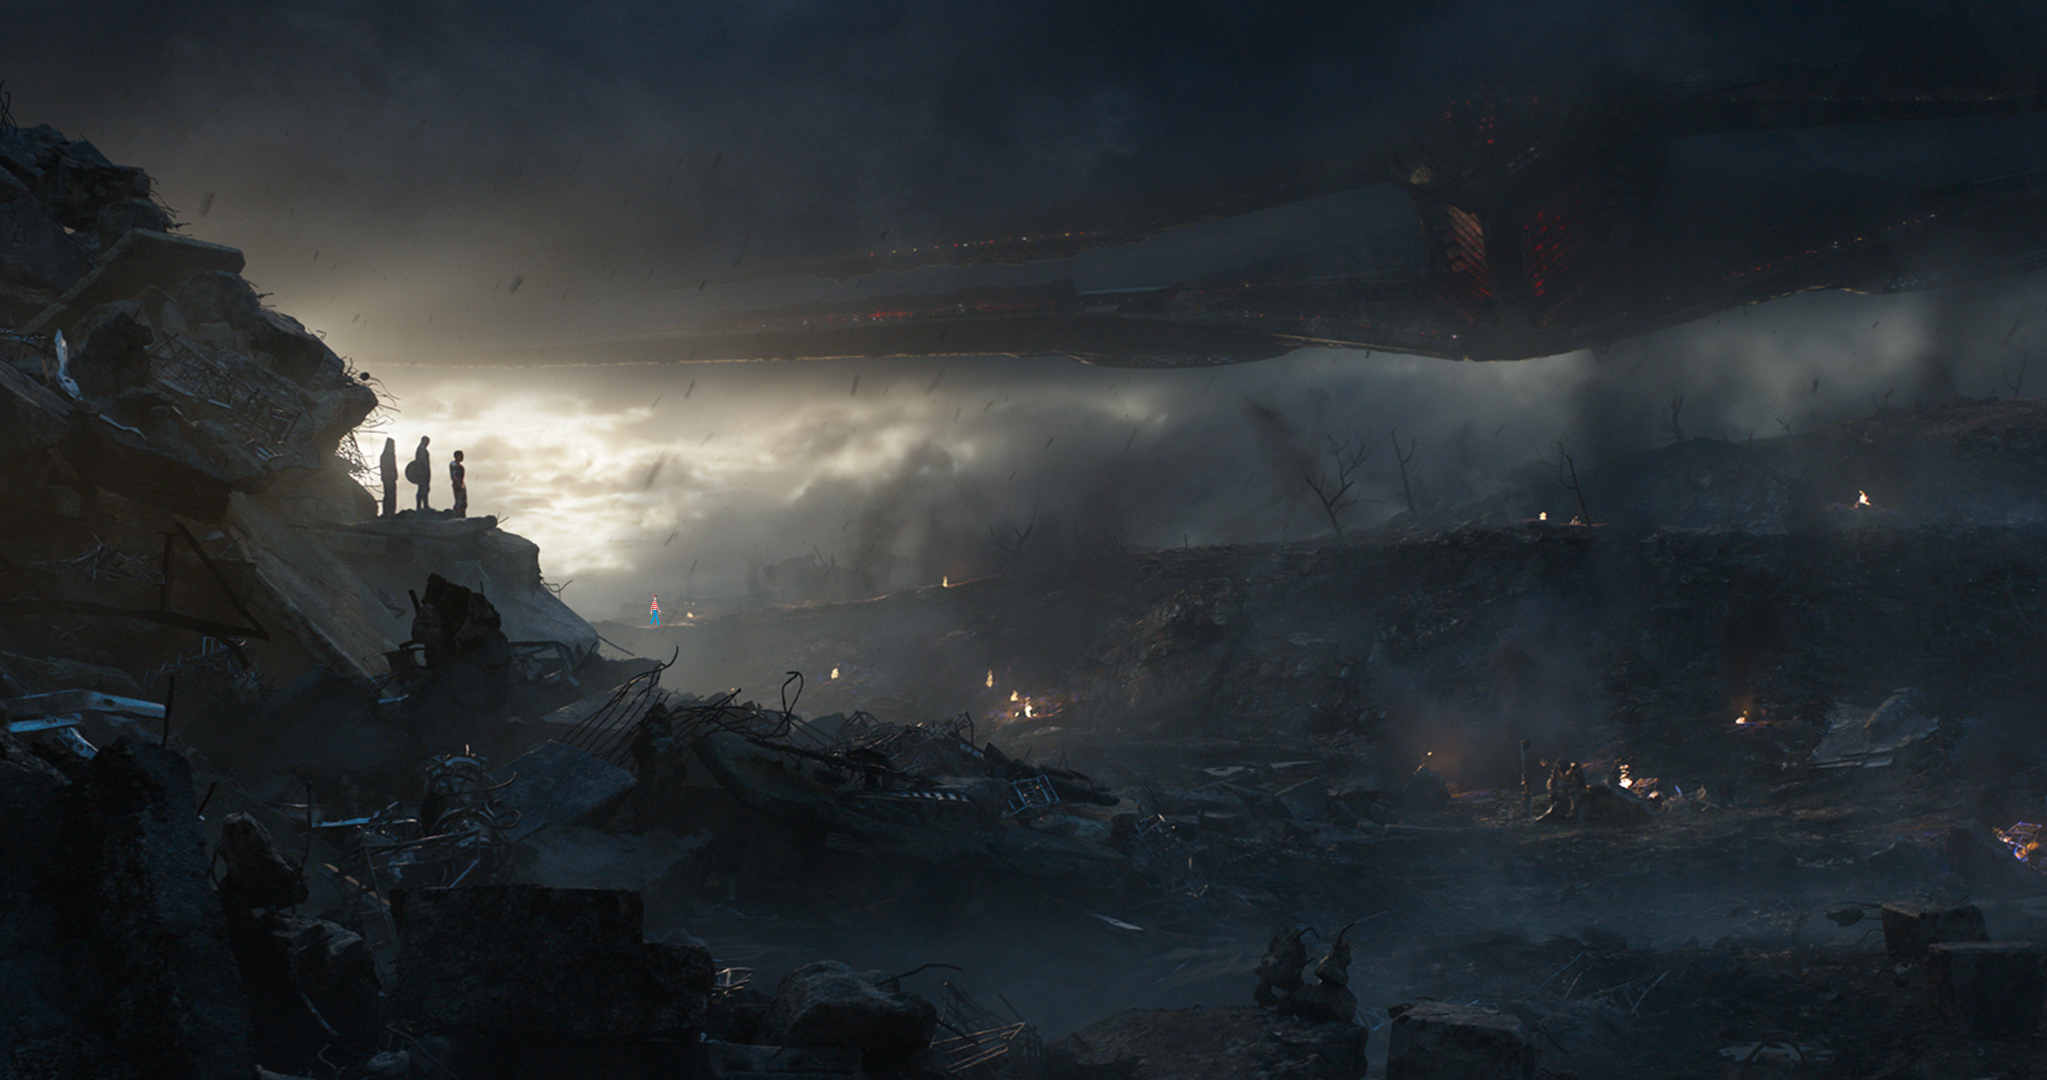 We Think We Found Nova In These Avengers: Endgame Stills